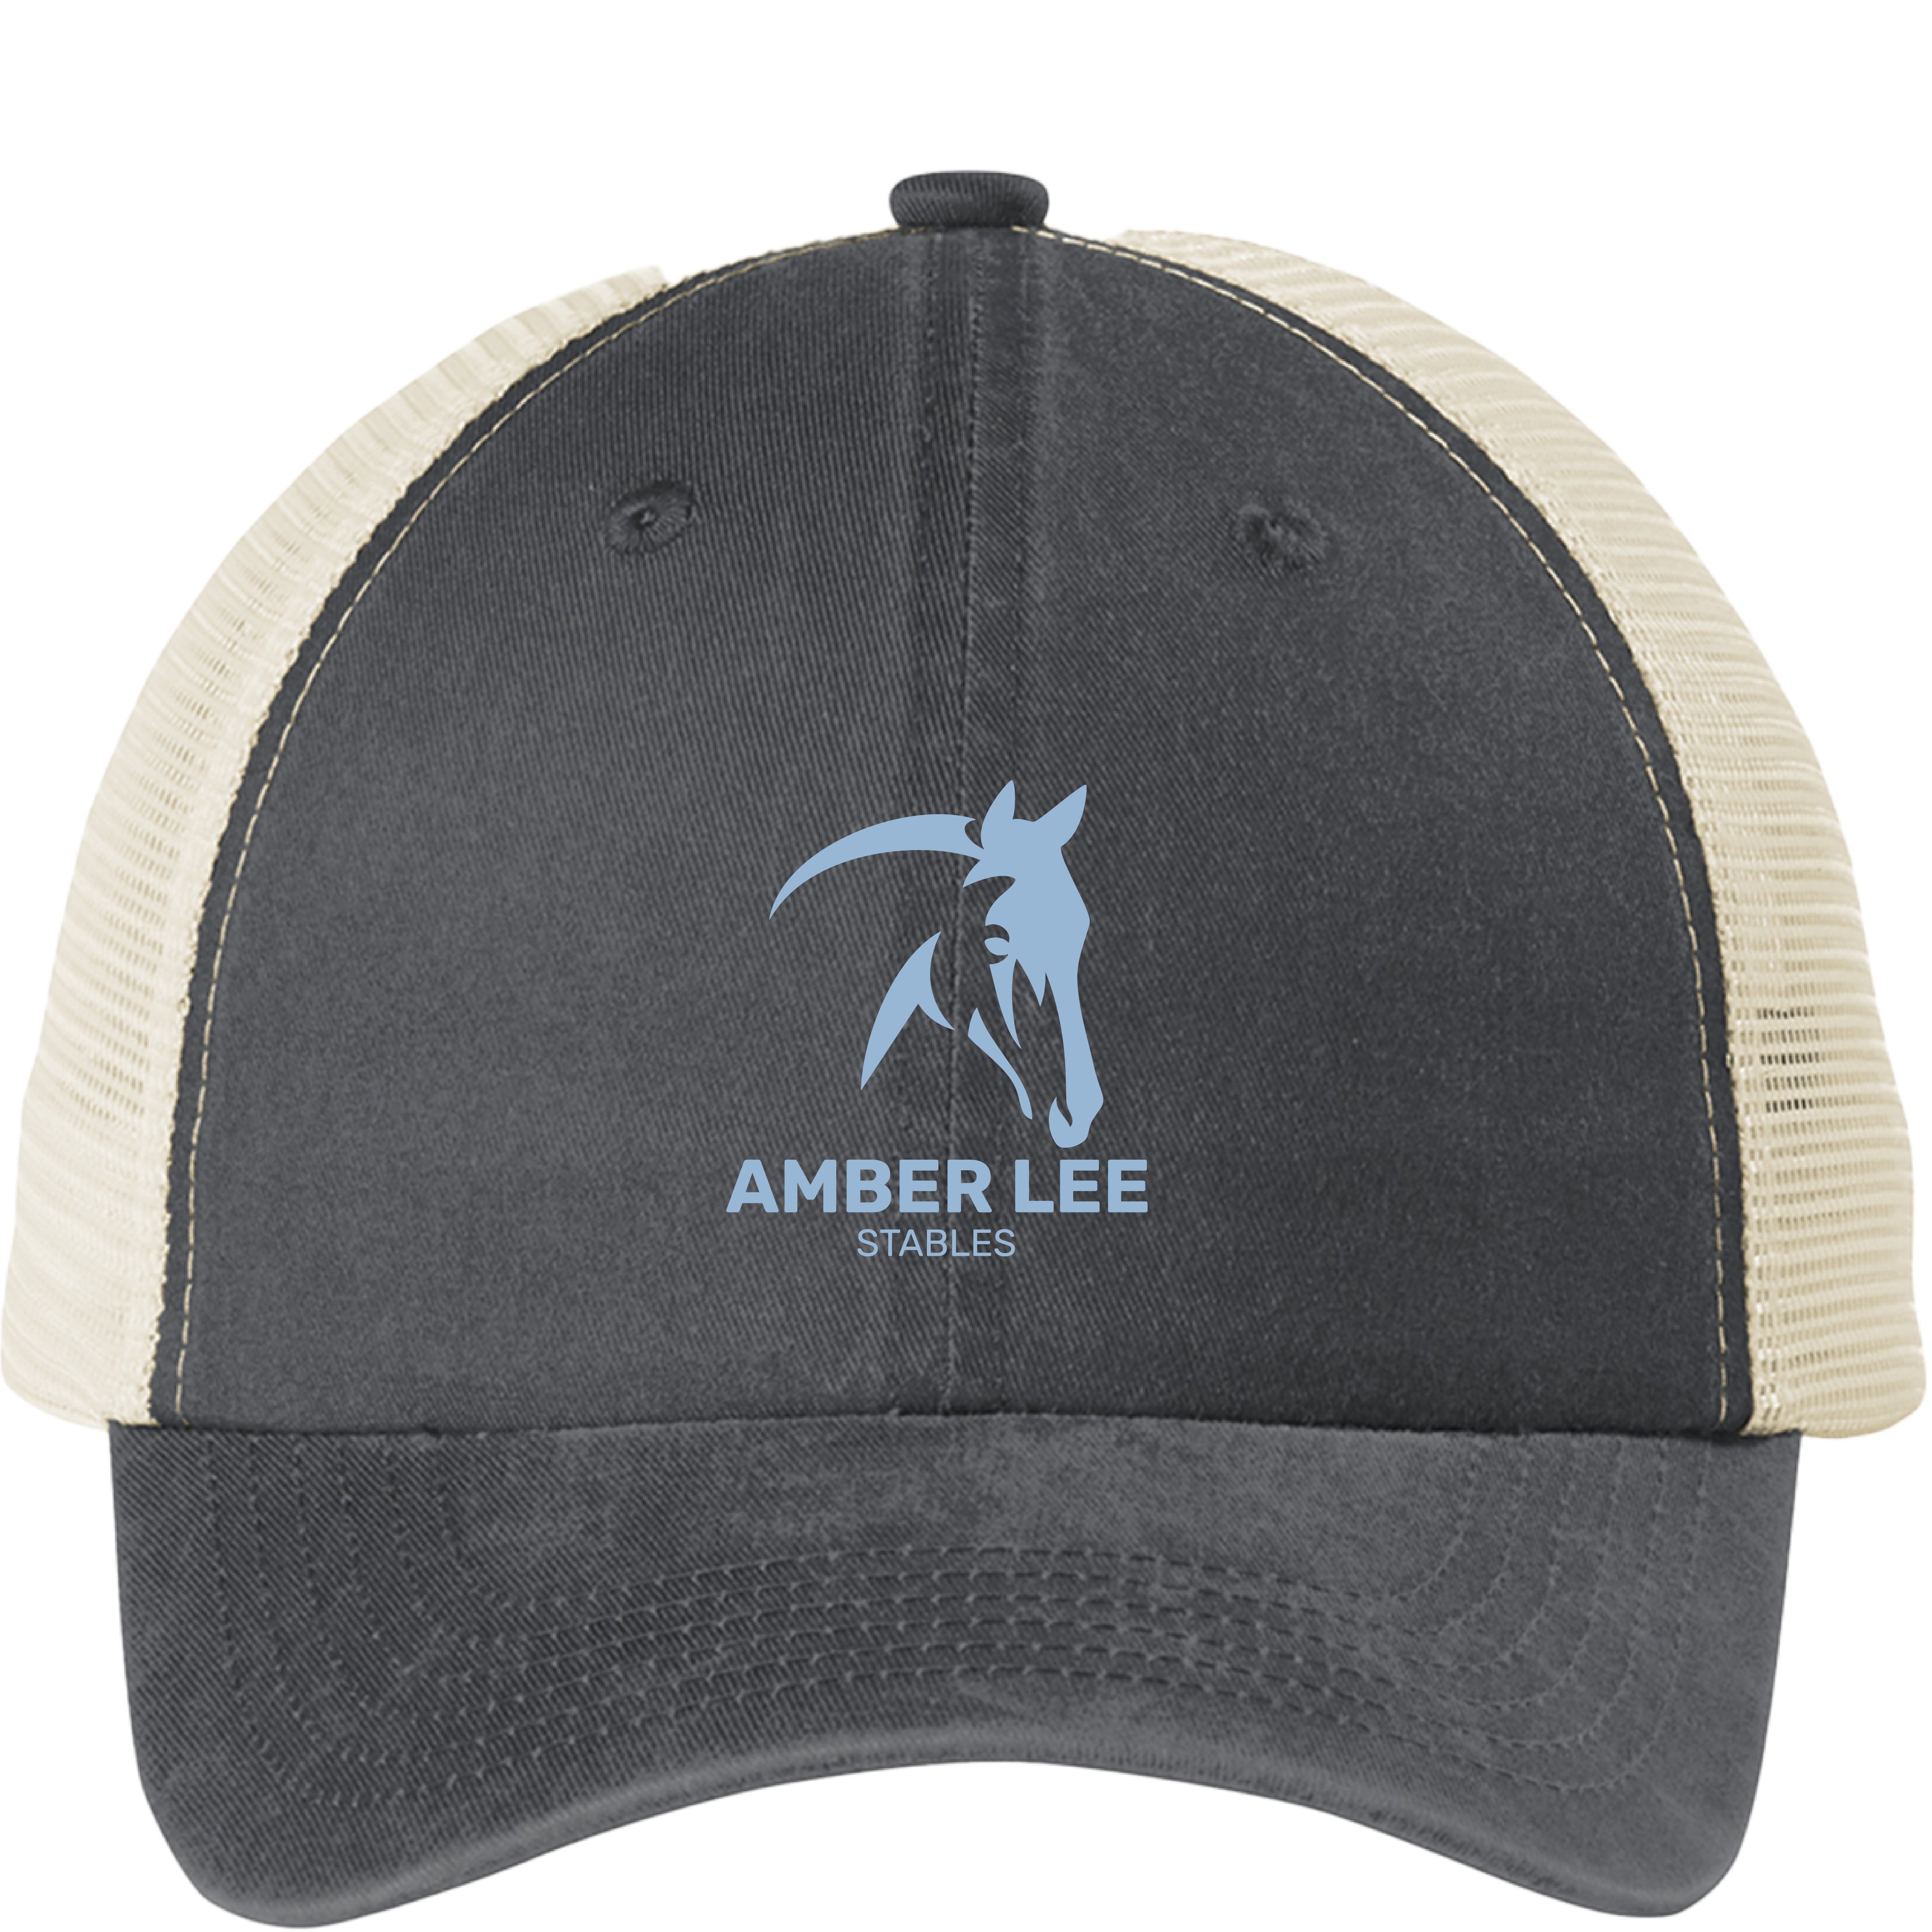 Amber Lee Stables - Beach Wash Snapback Trucker Cap